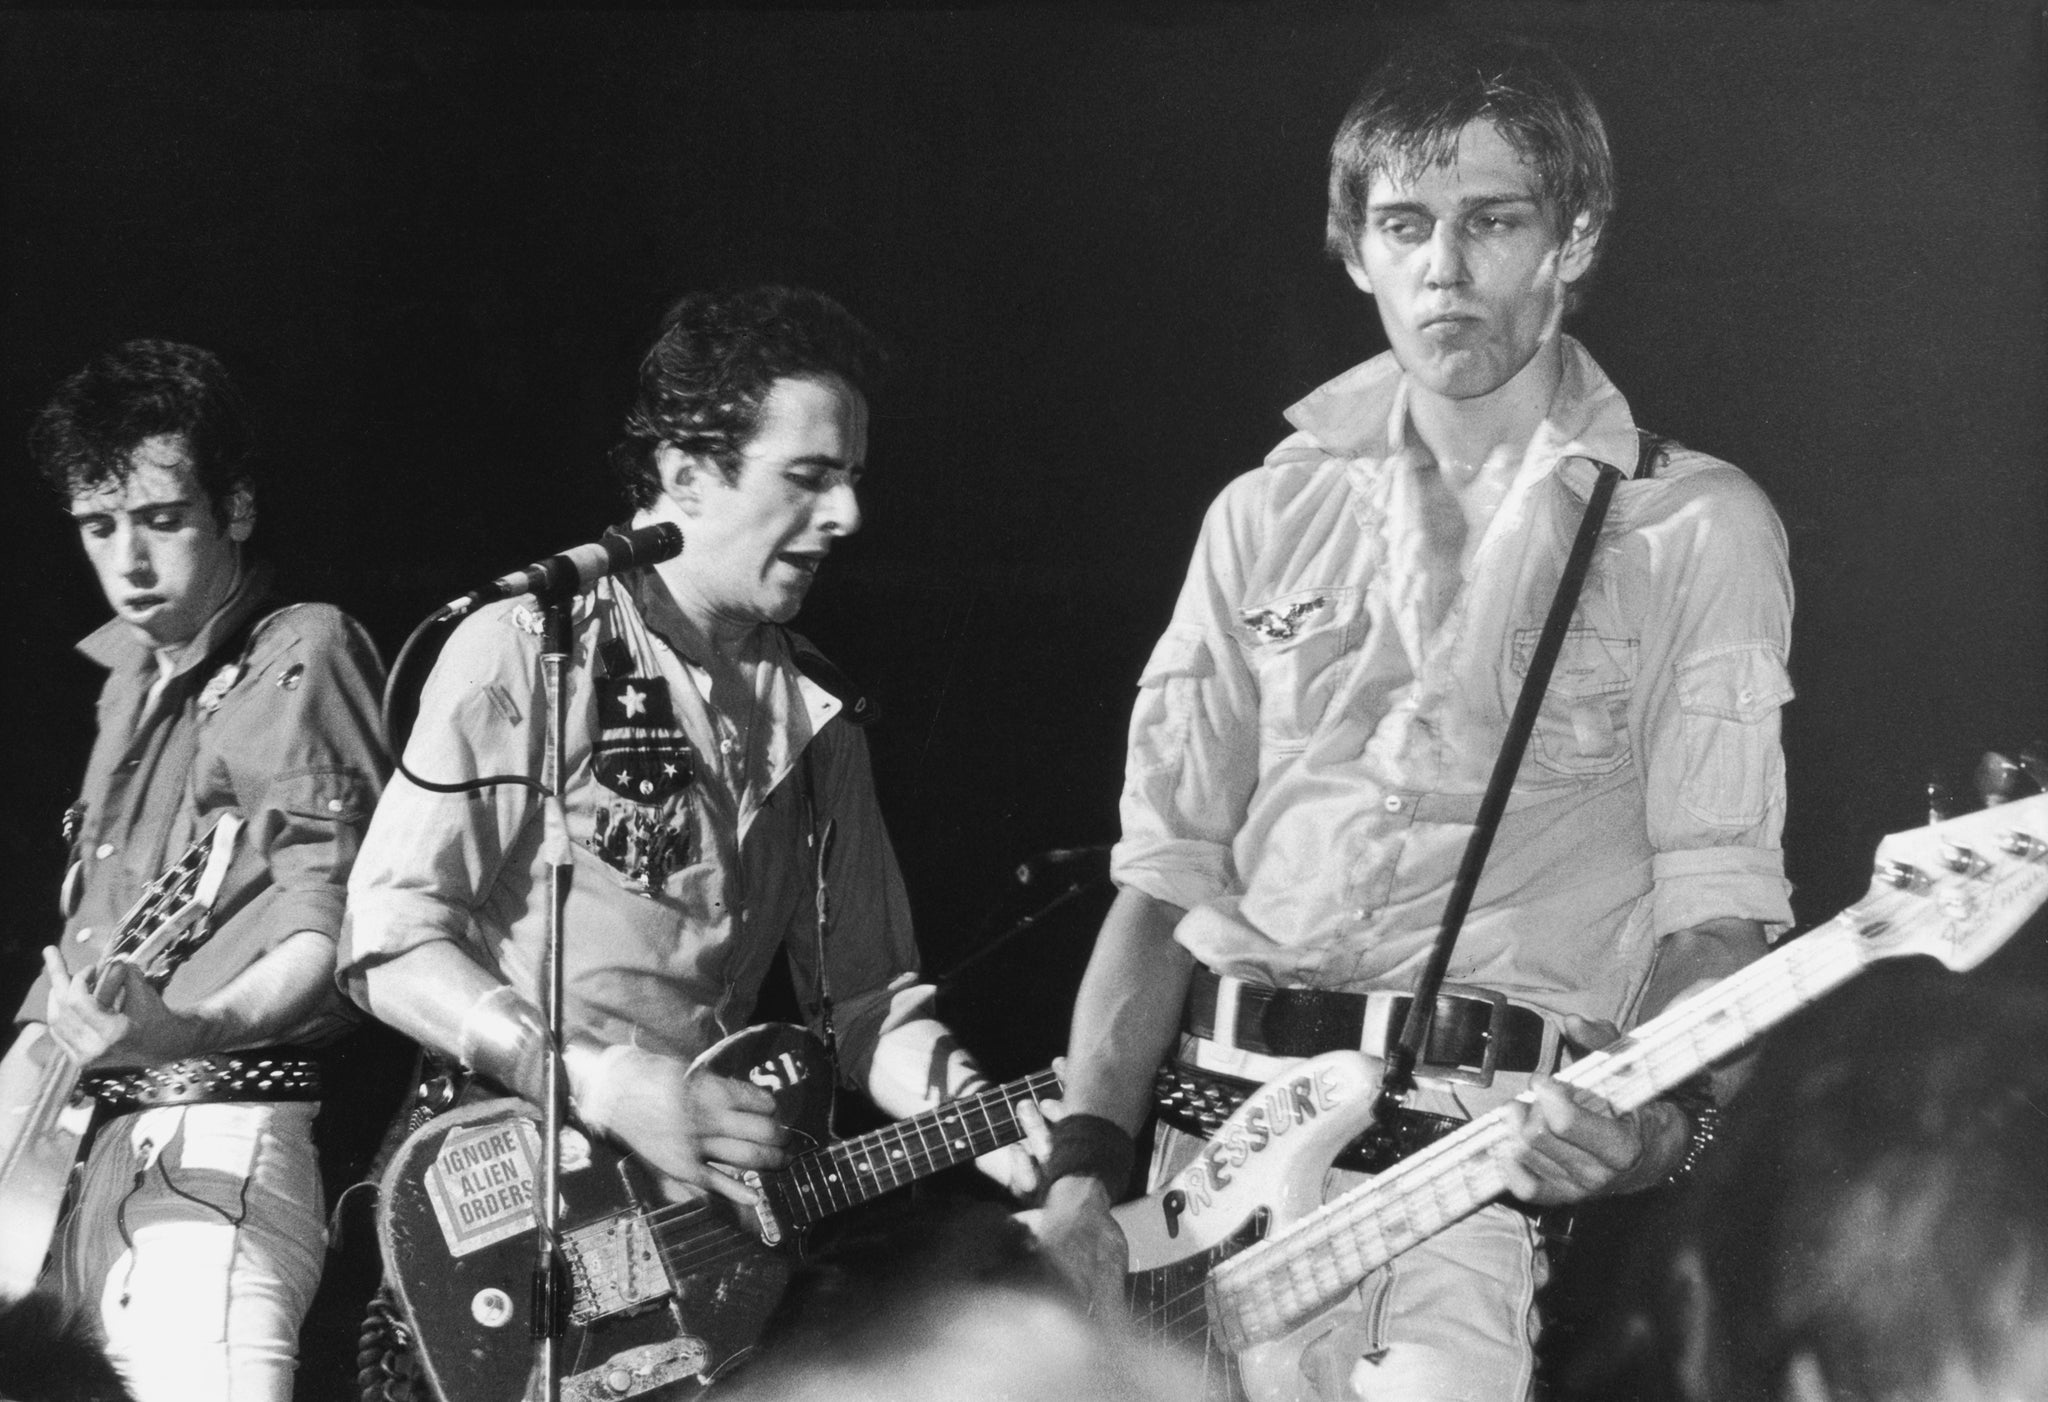 From left to right, Mick Jones, Joe Strummer and Paul Simonon of punk rock band The Clash, circa 1980.